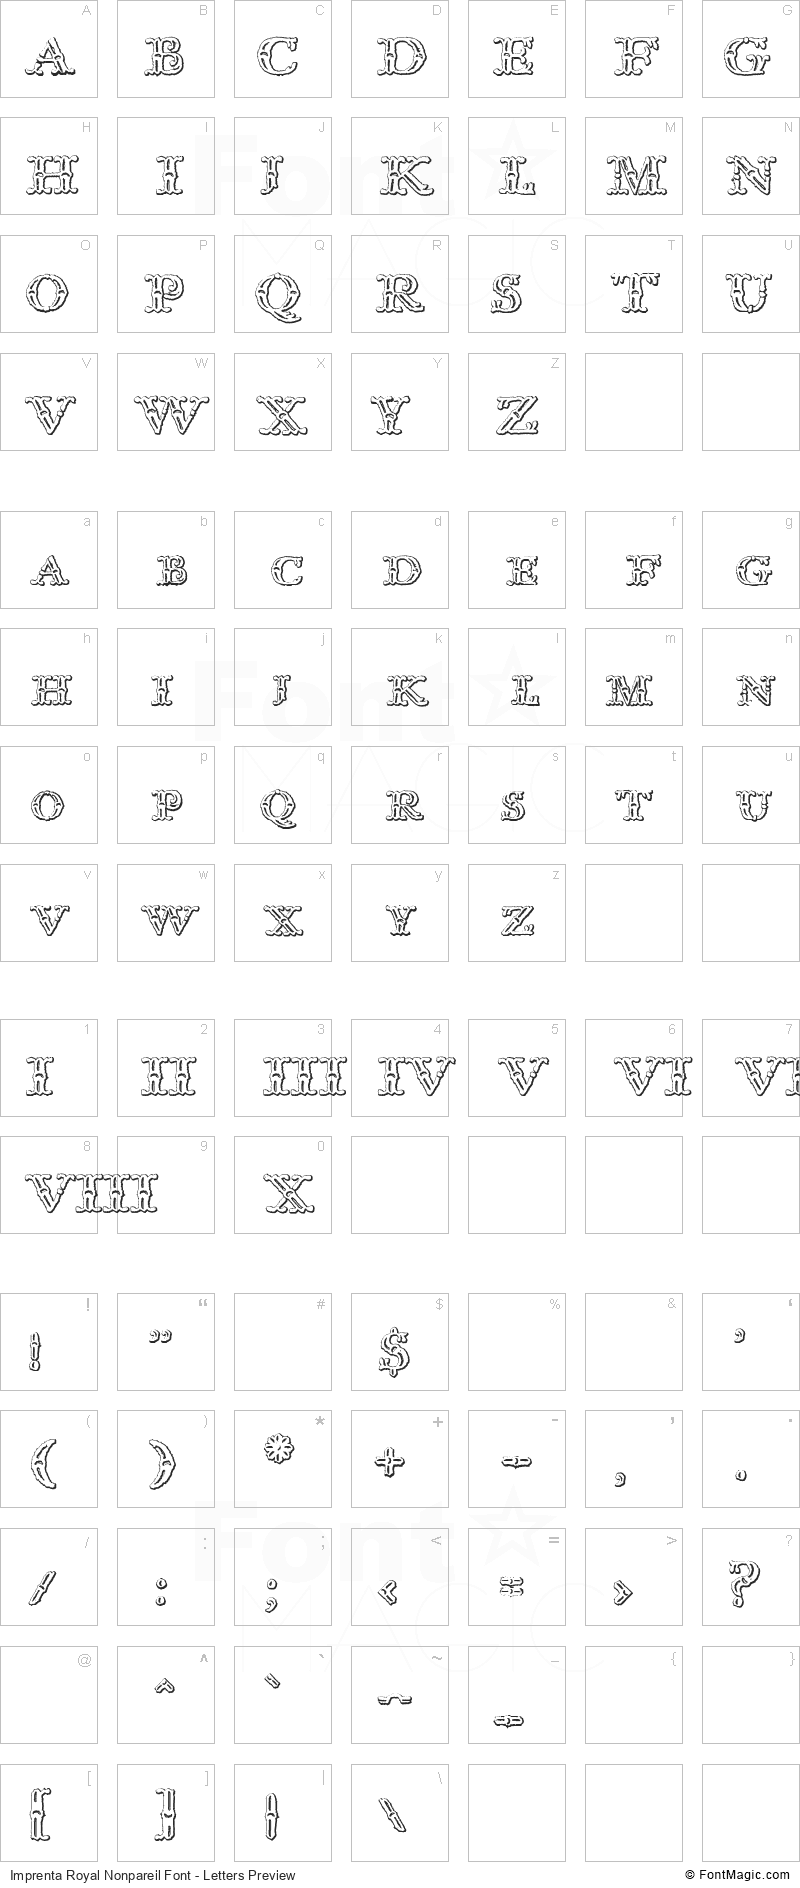 Imprenta Royal Nonpareil Font - All Latters Preview Chart